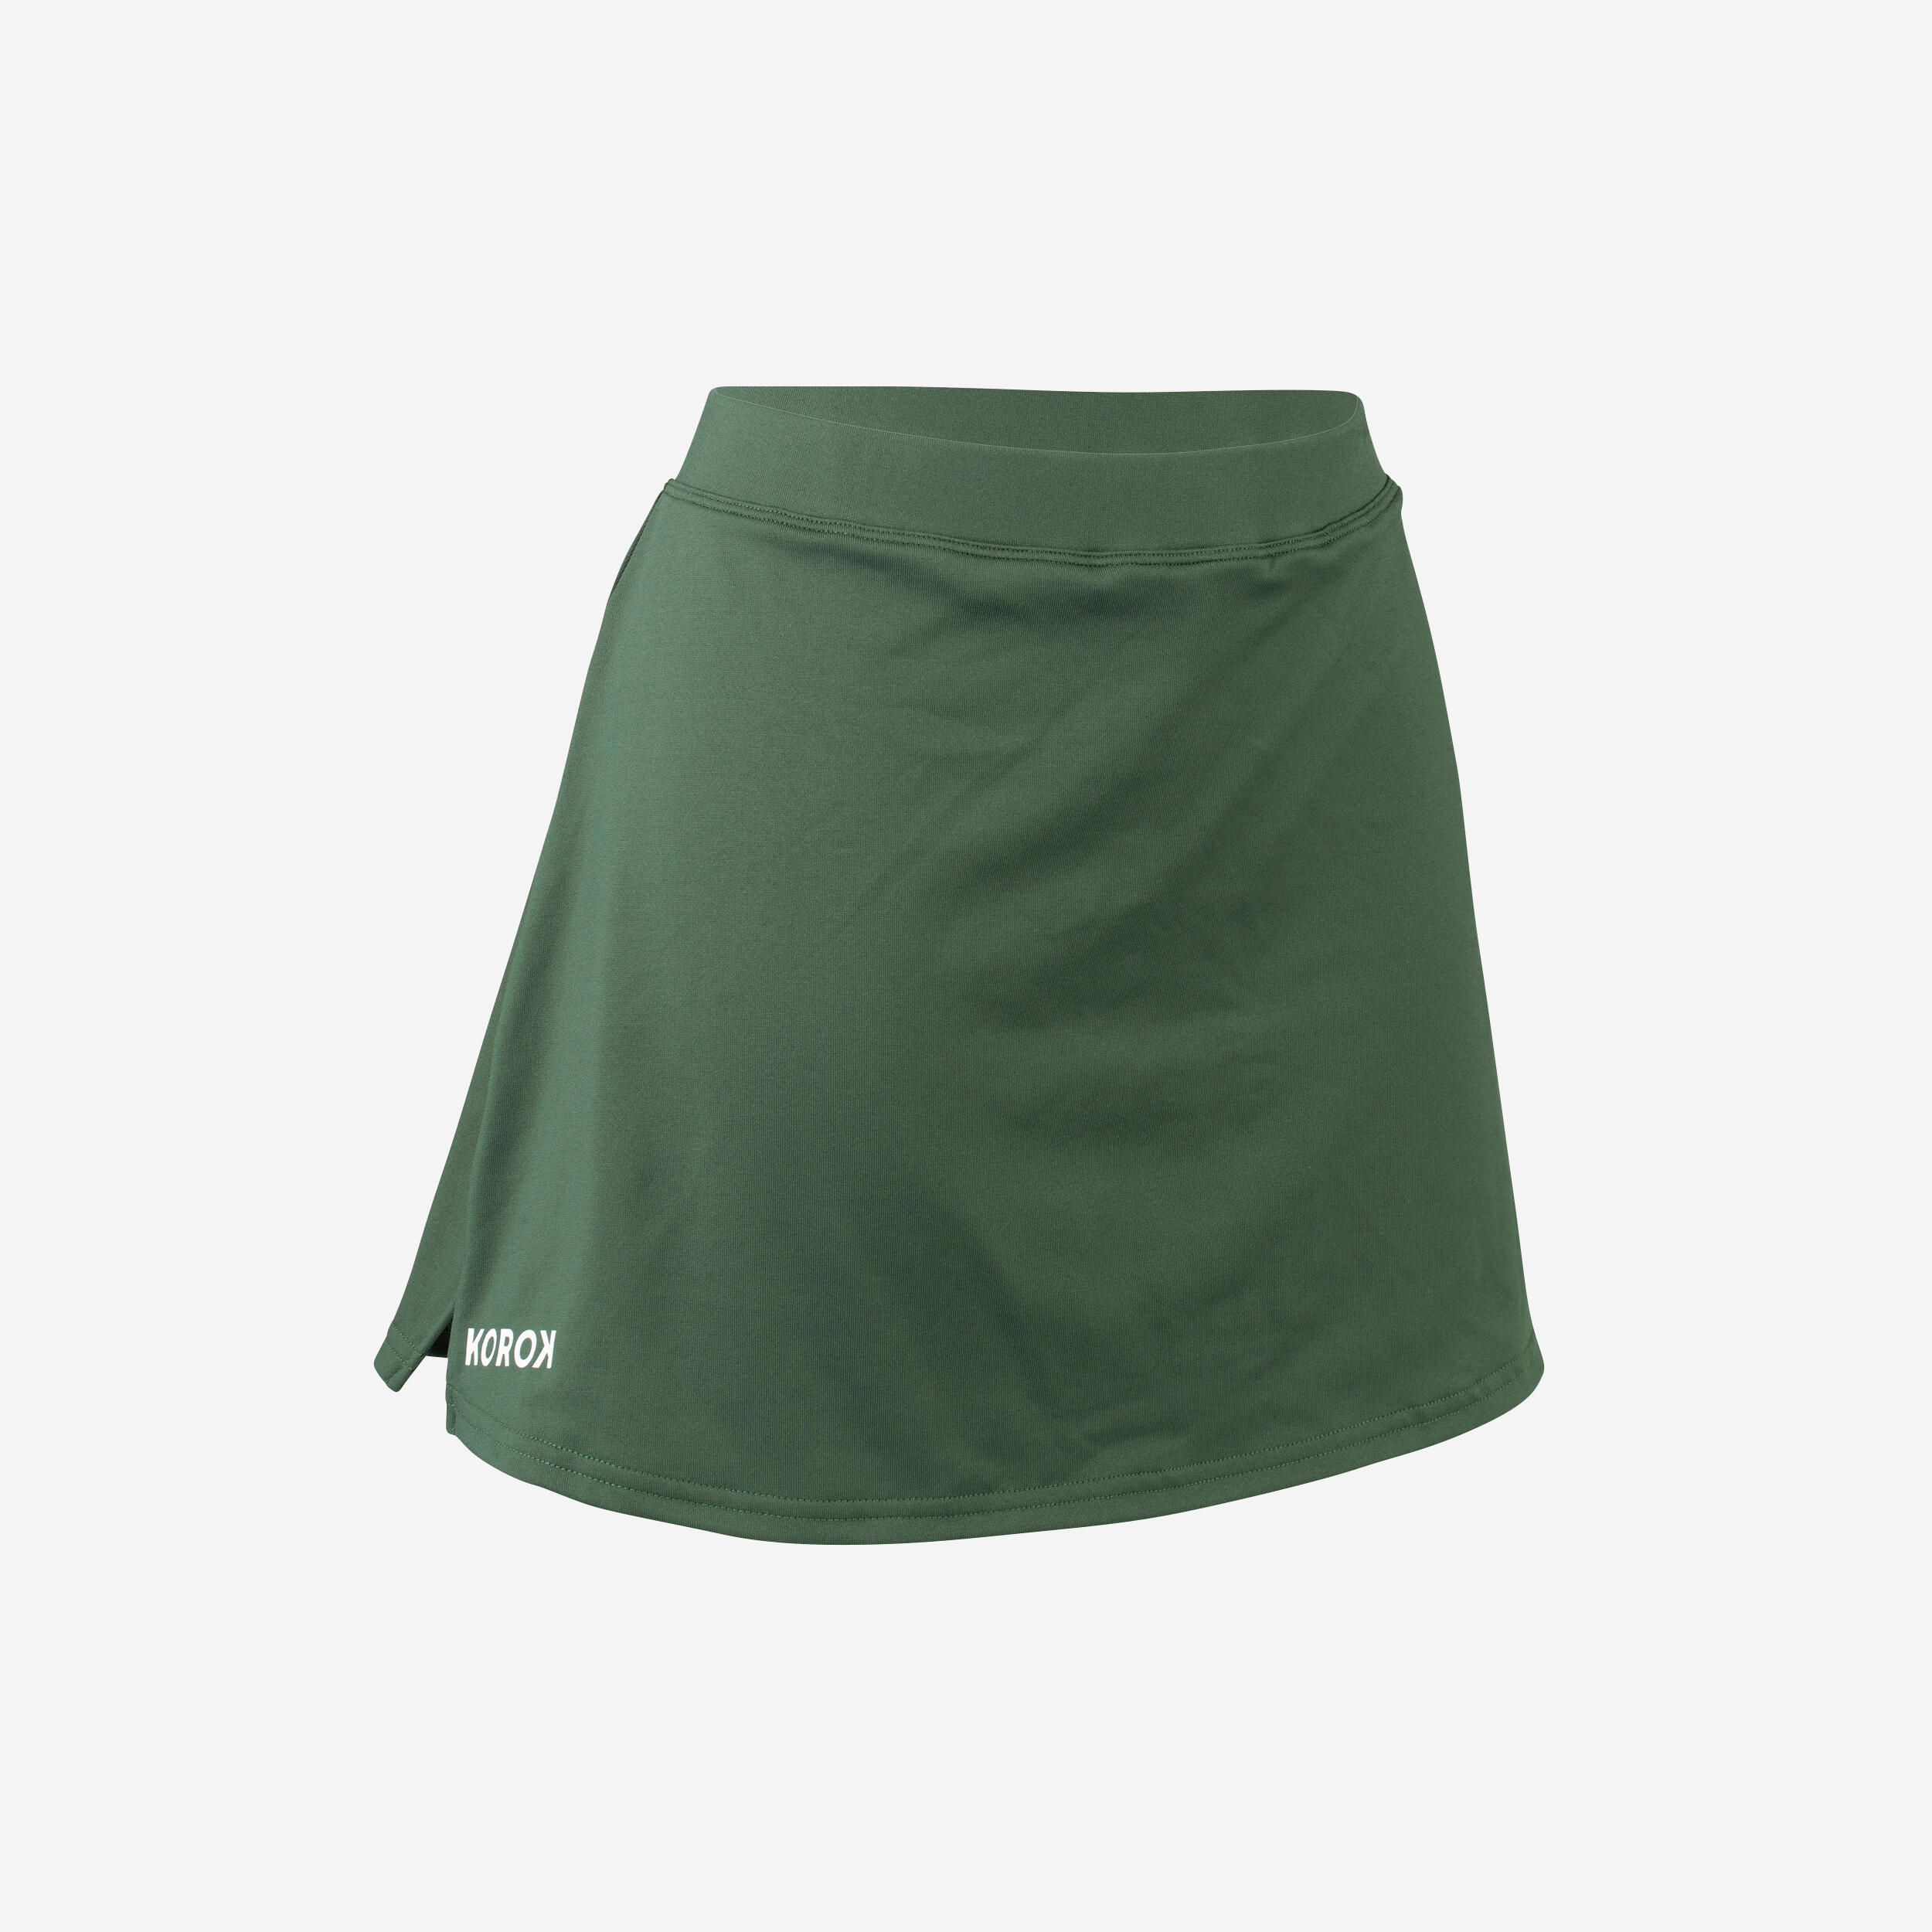 KOROK Women's Field Hockey Skirt FH500 - Green